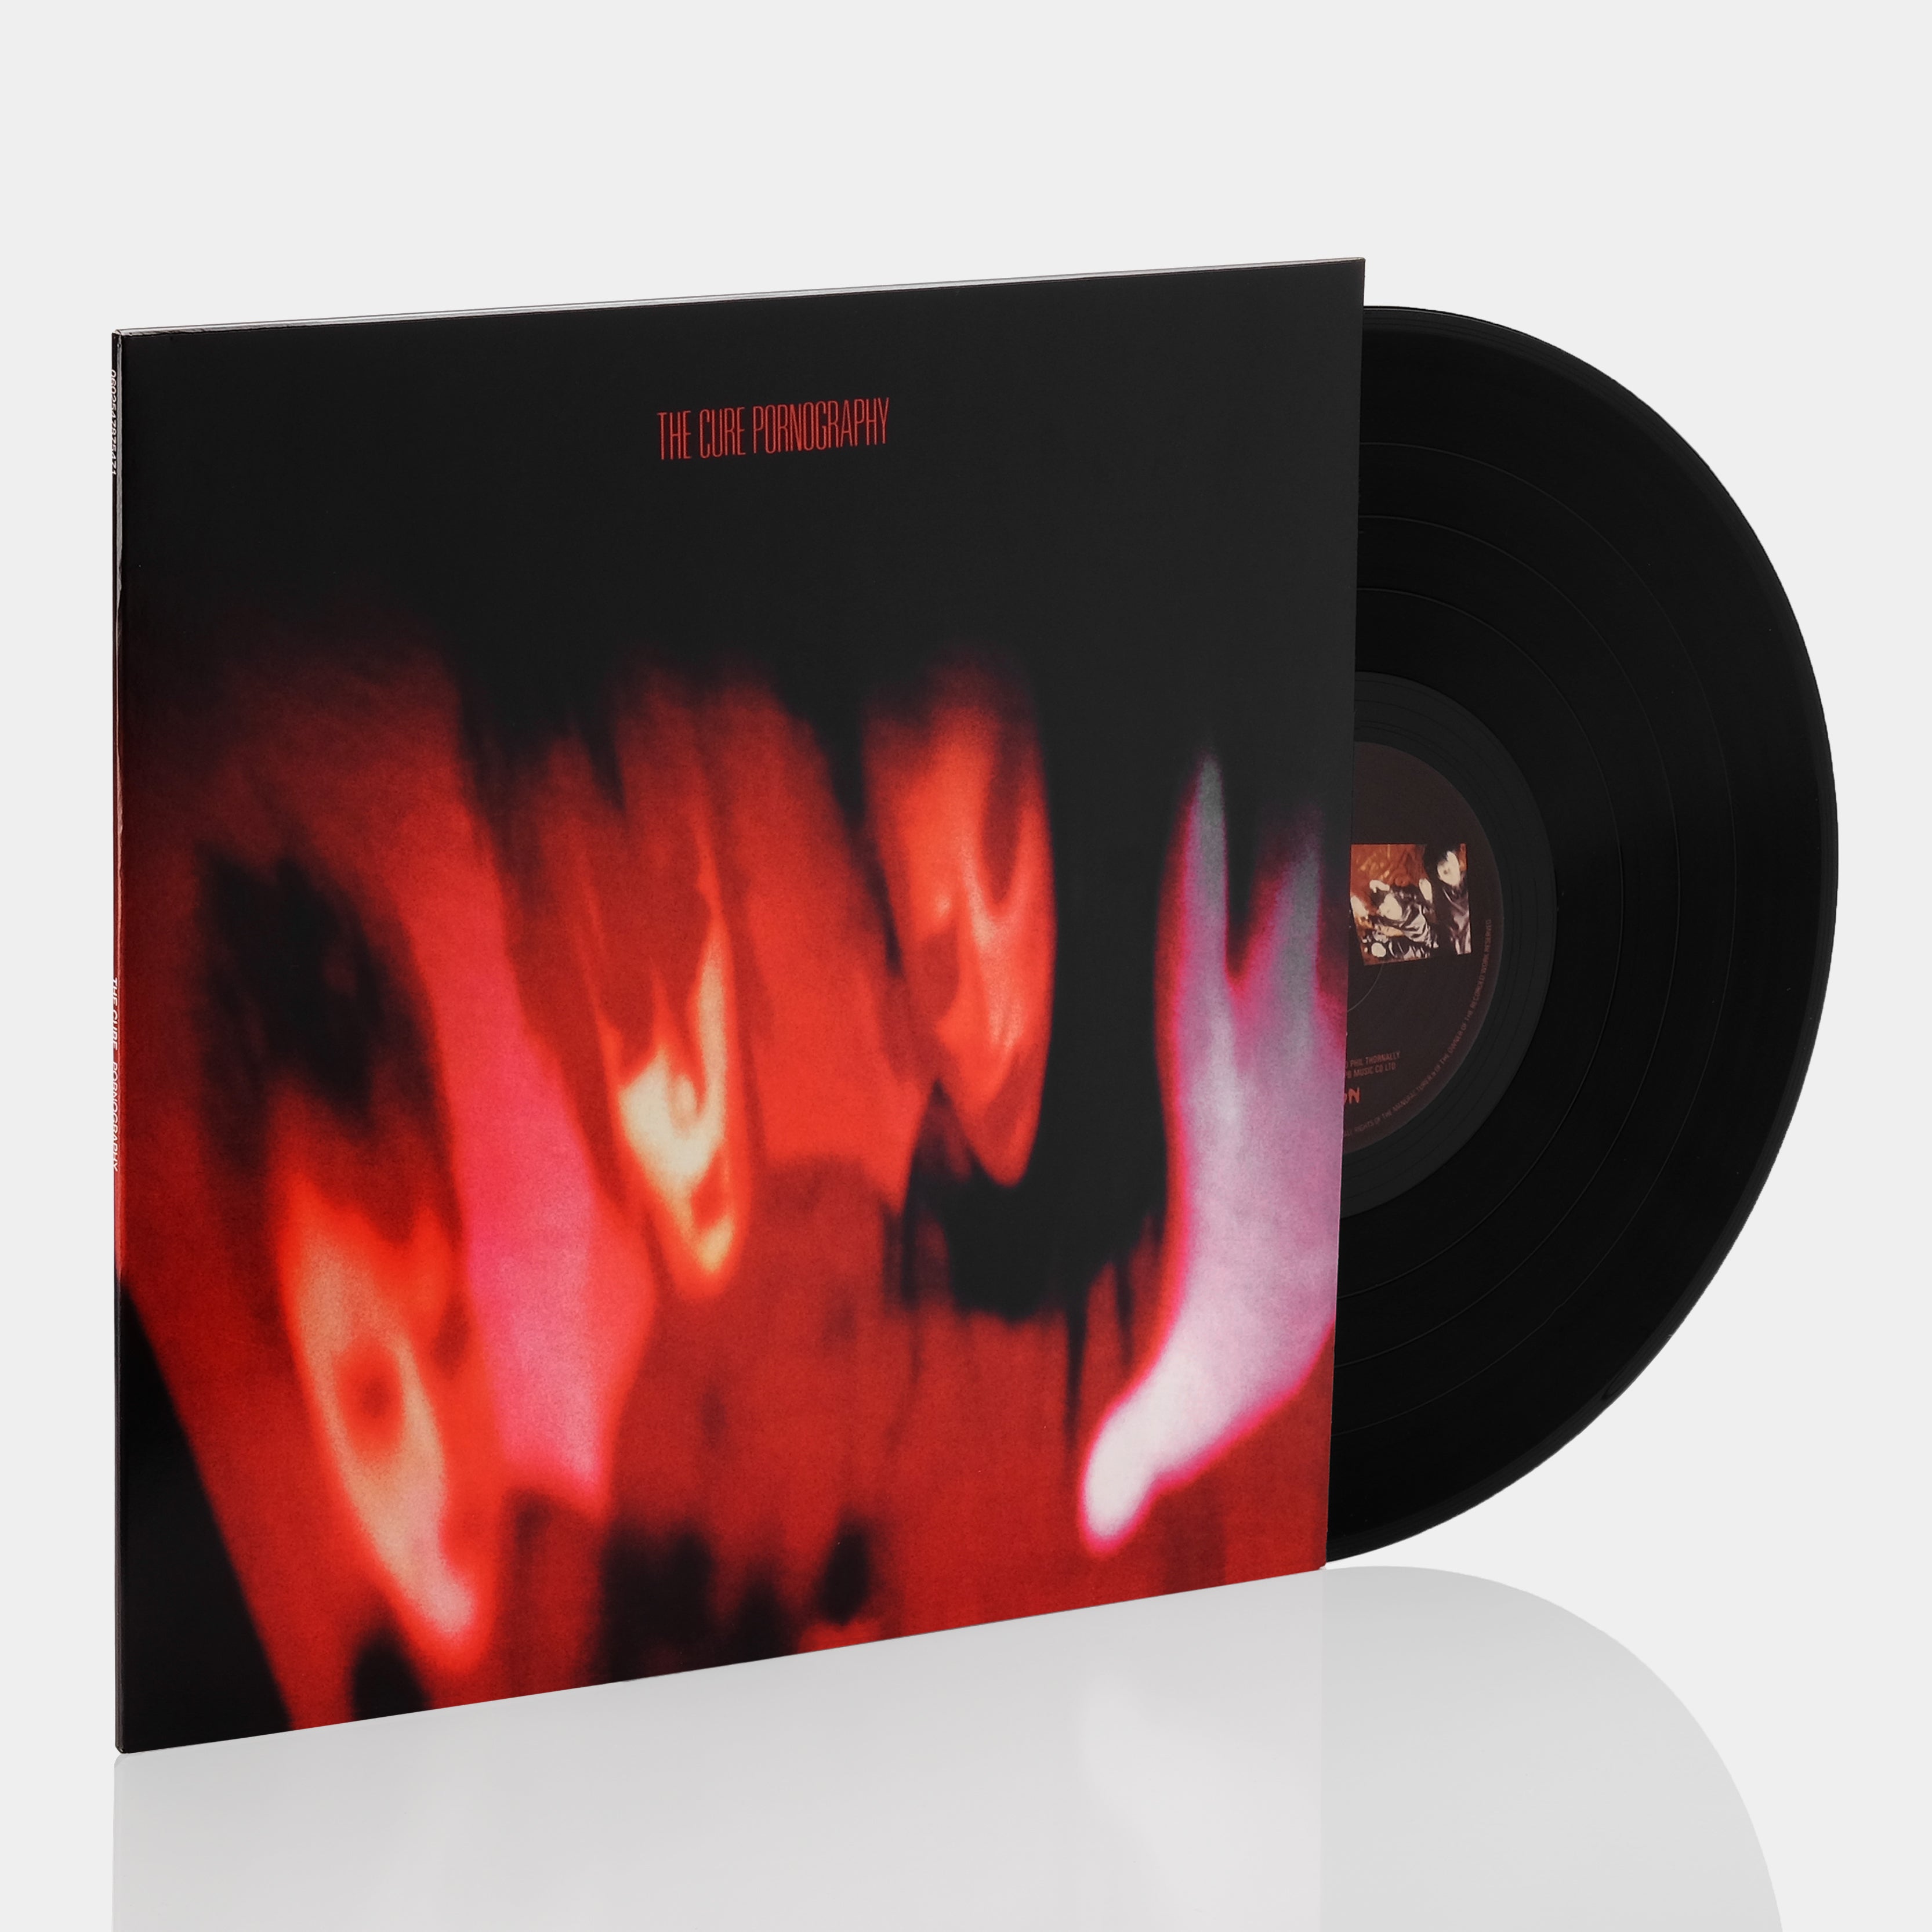 The Cure - Pornography LP Vinyl Record